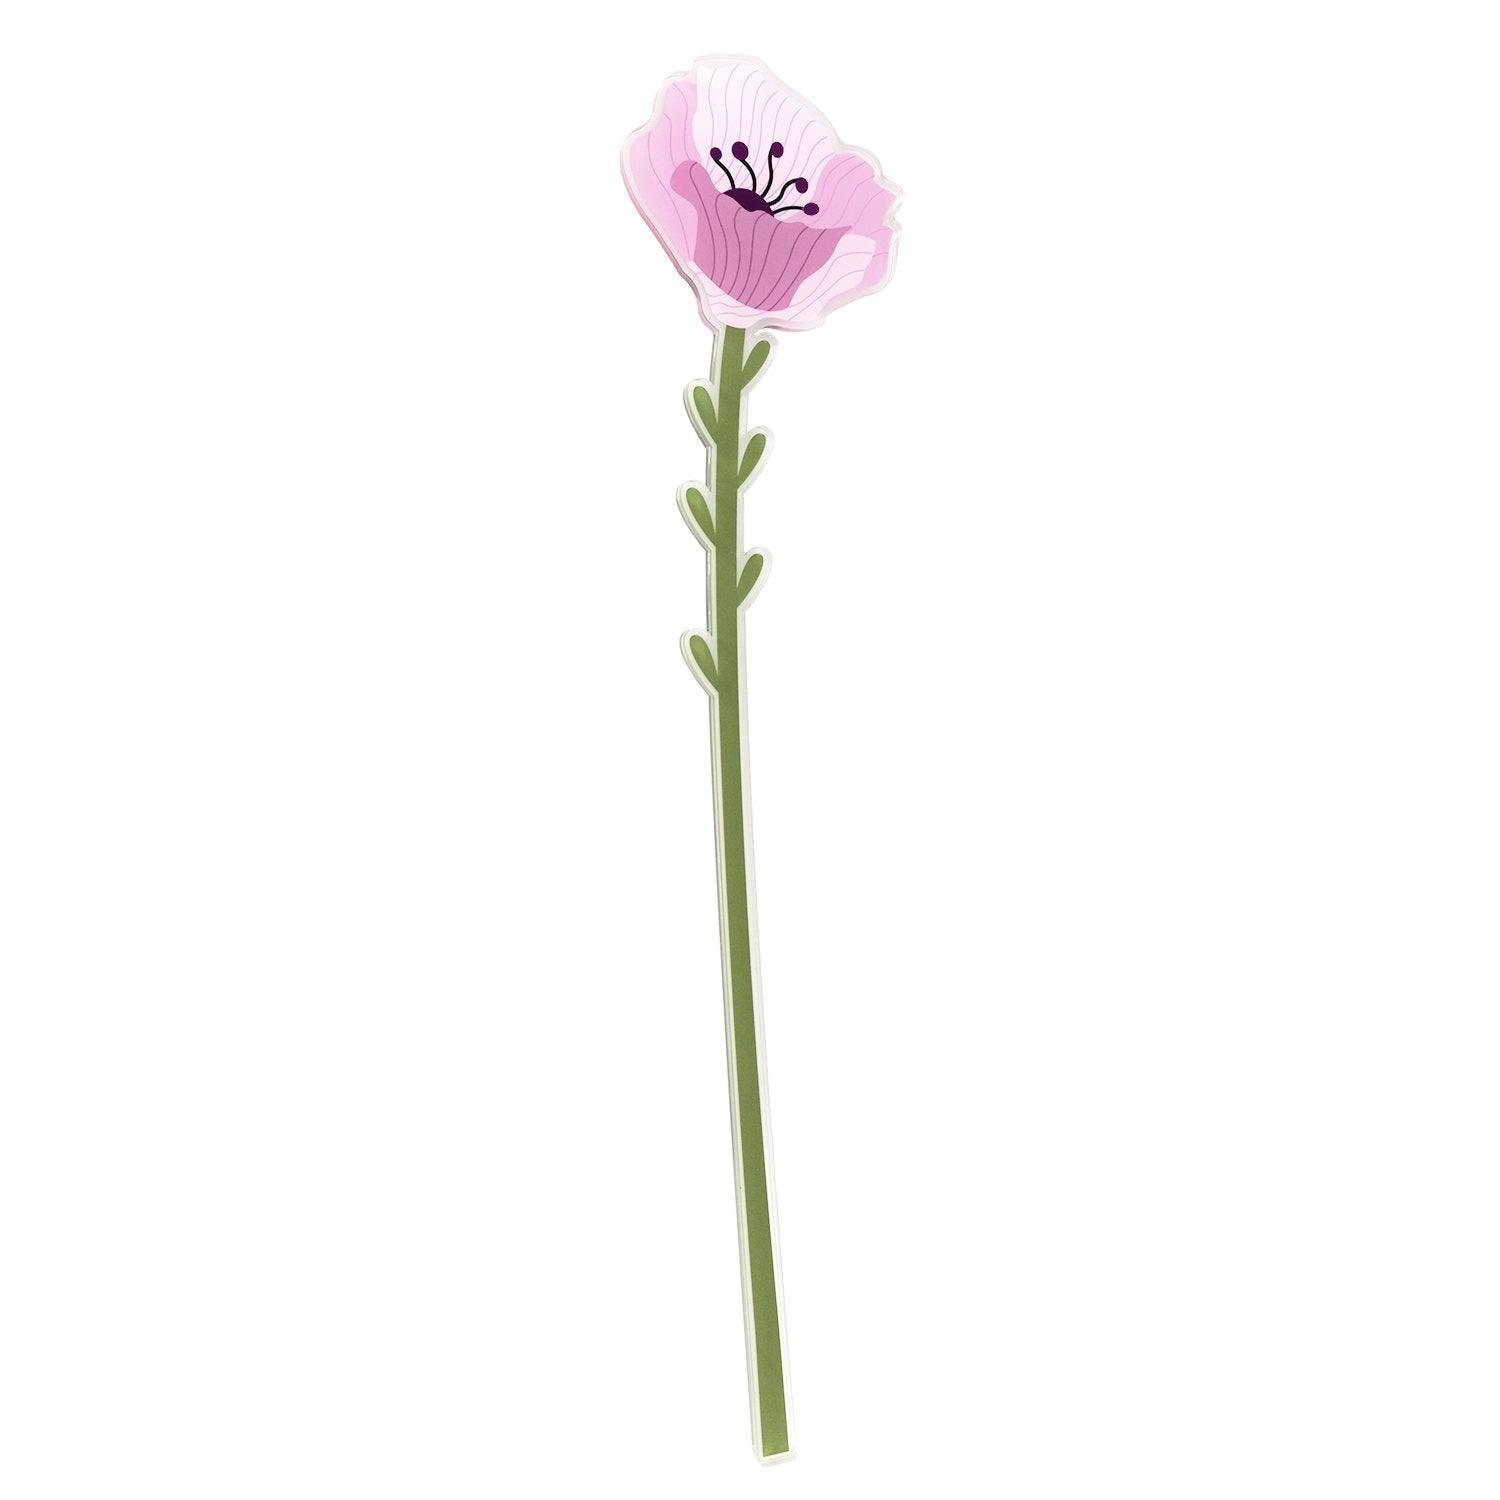 Vesta Funny Flower in cristallo acrilico - Petunia - MARIKA DE PAOLA - HOME DECOR